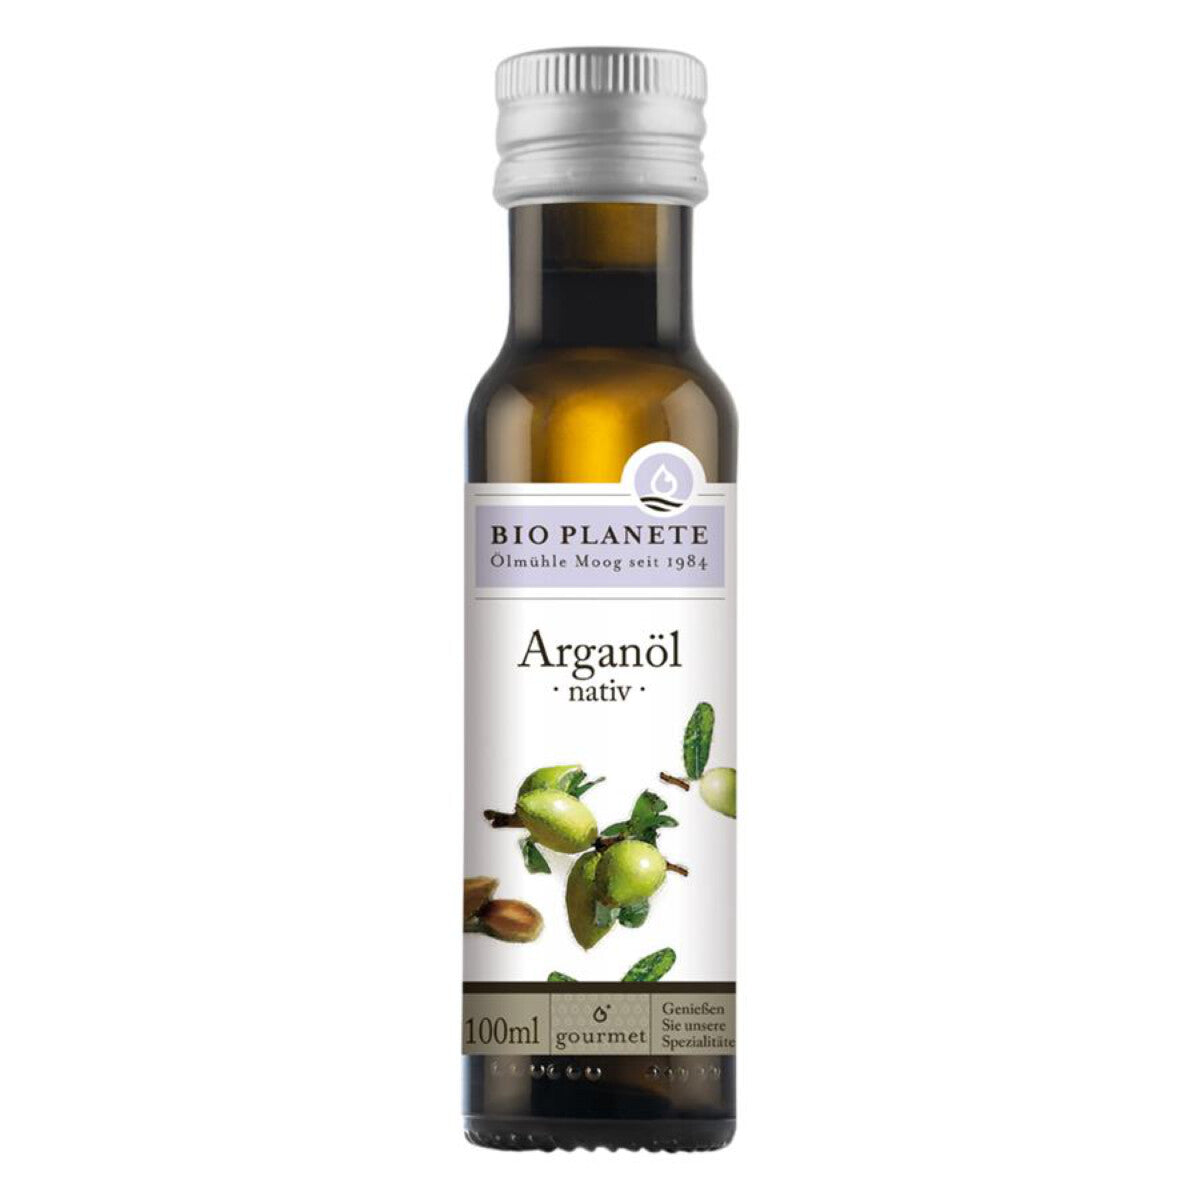 BIO PLANETE GOURMET Arganöl nativ - 100 ml